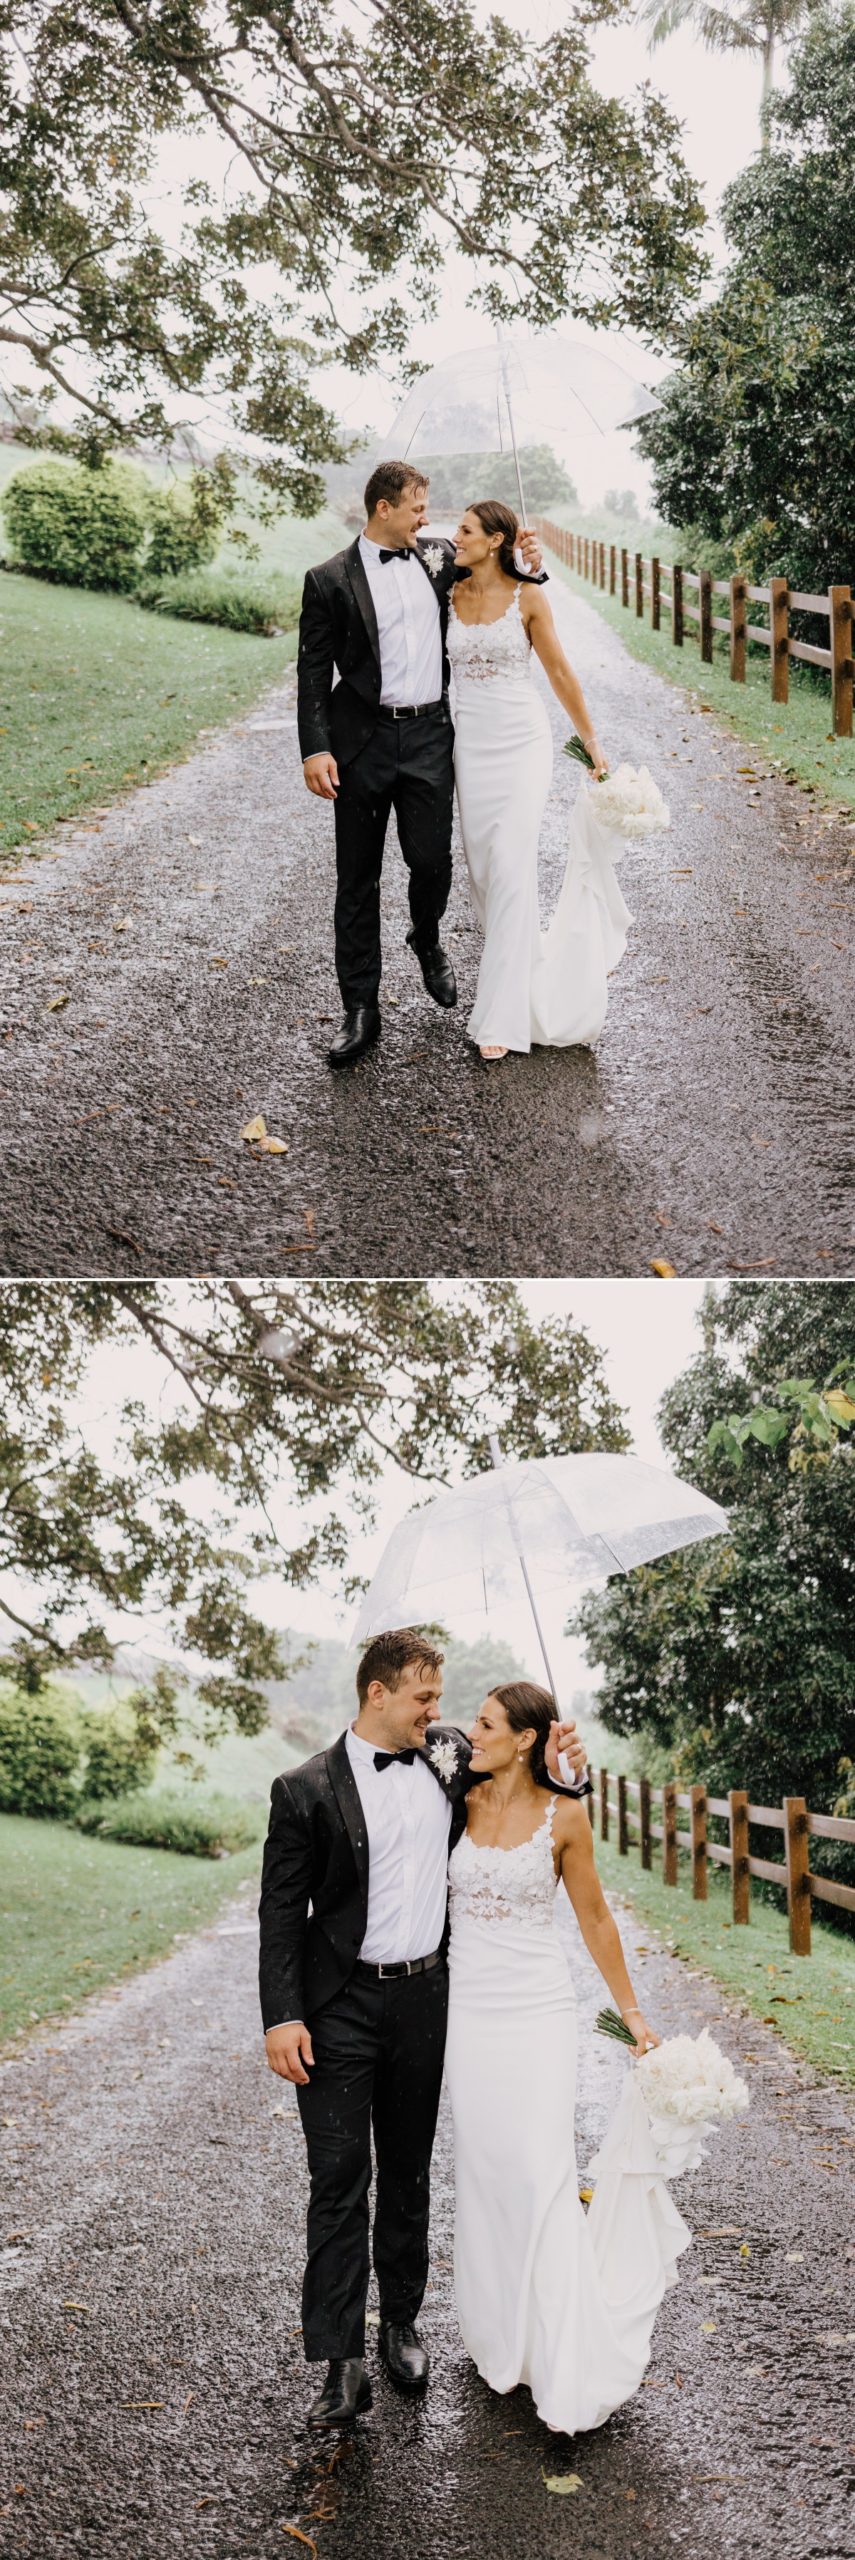 rain on wedding day